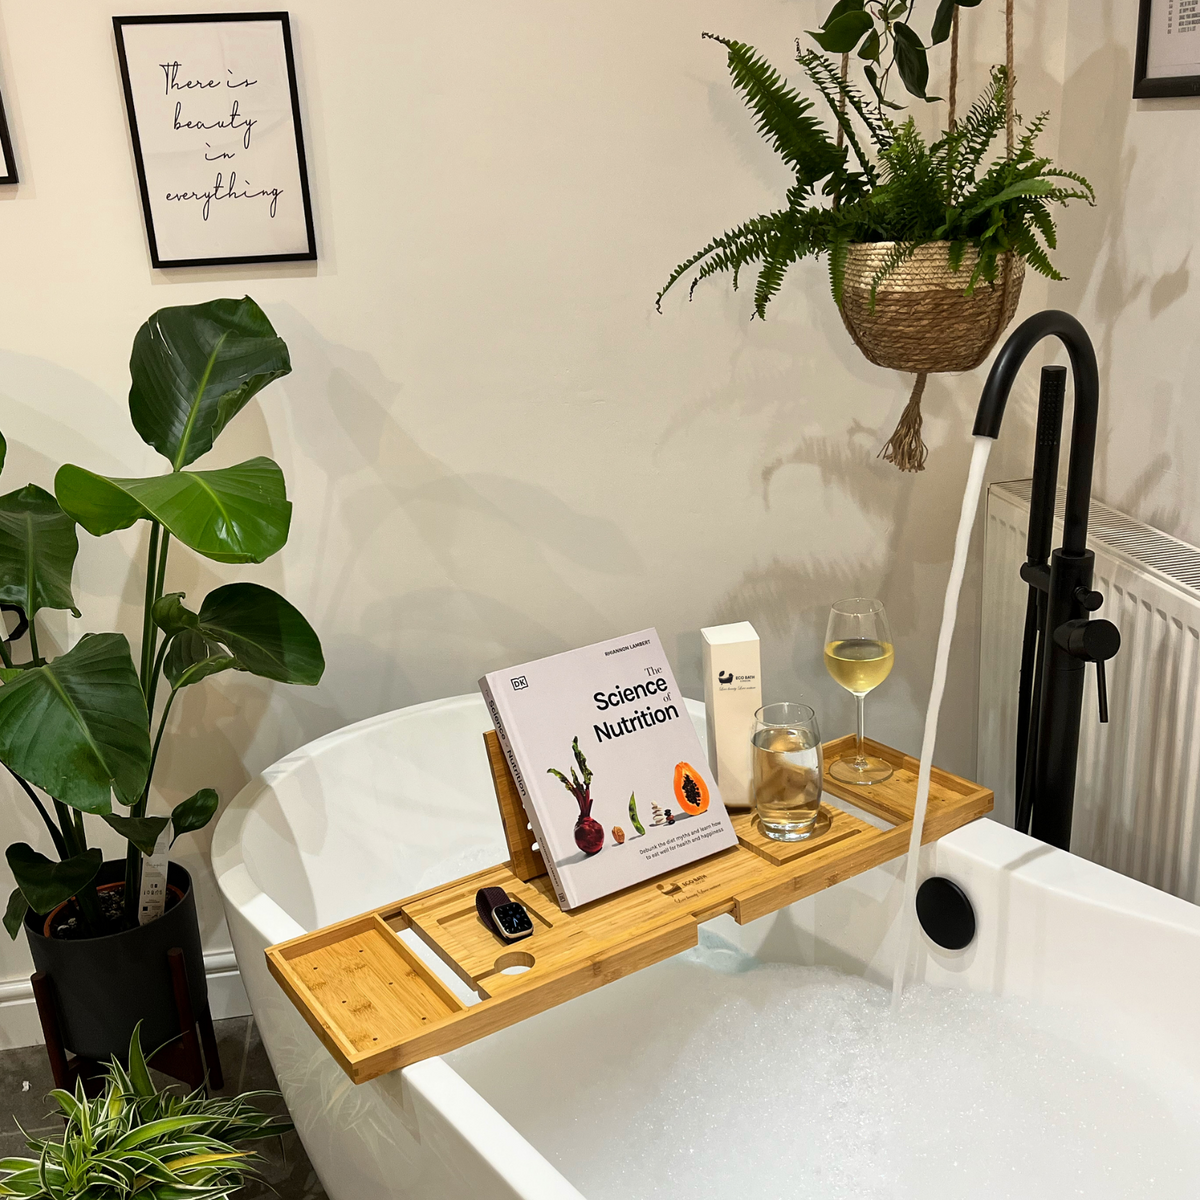 Luxury Bamboo Bath Tray